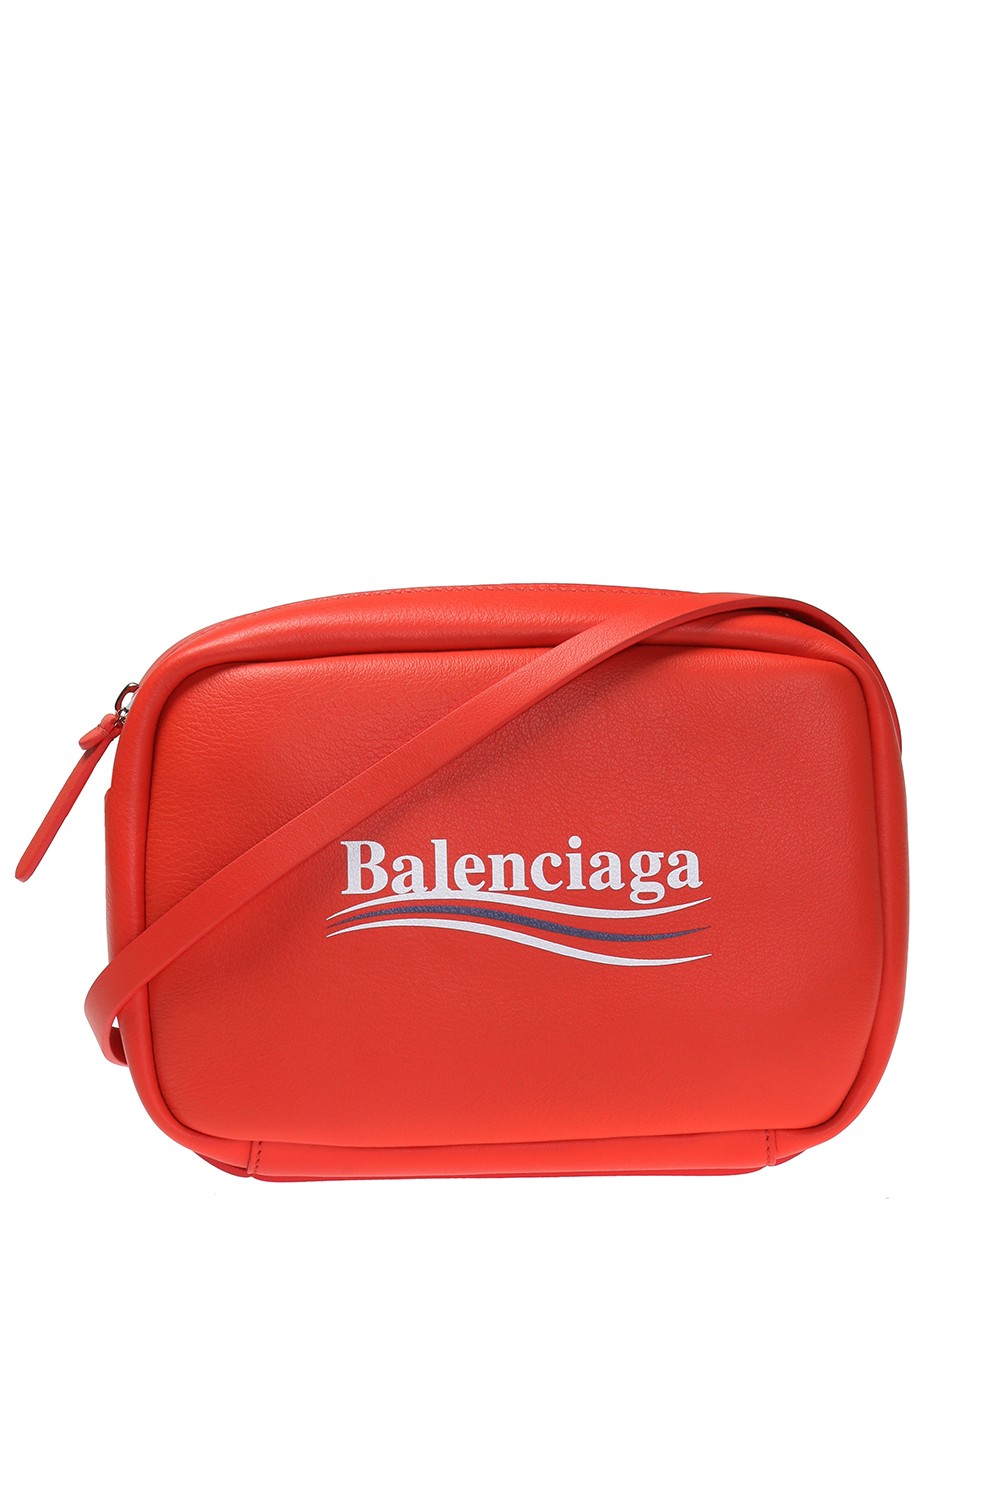 dennisrodman trying on the new #balenciaga “hand” bag ($4,290 USD)